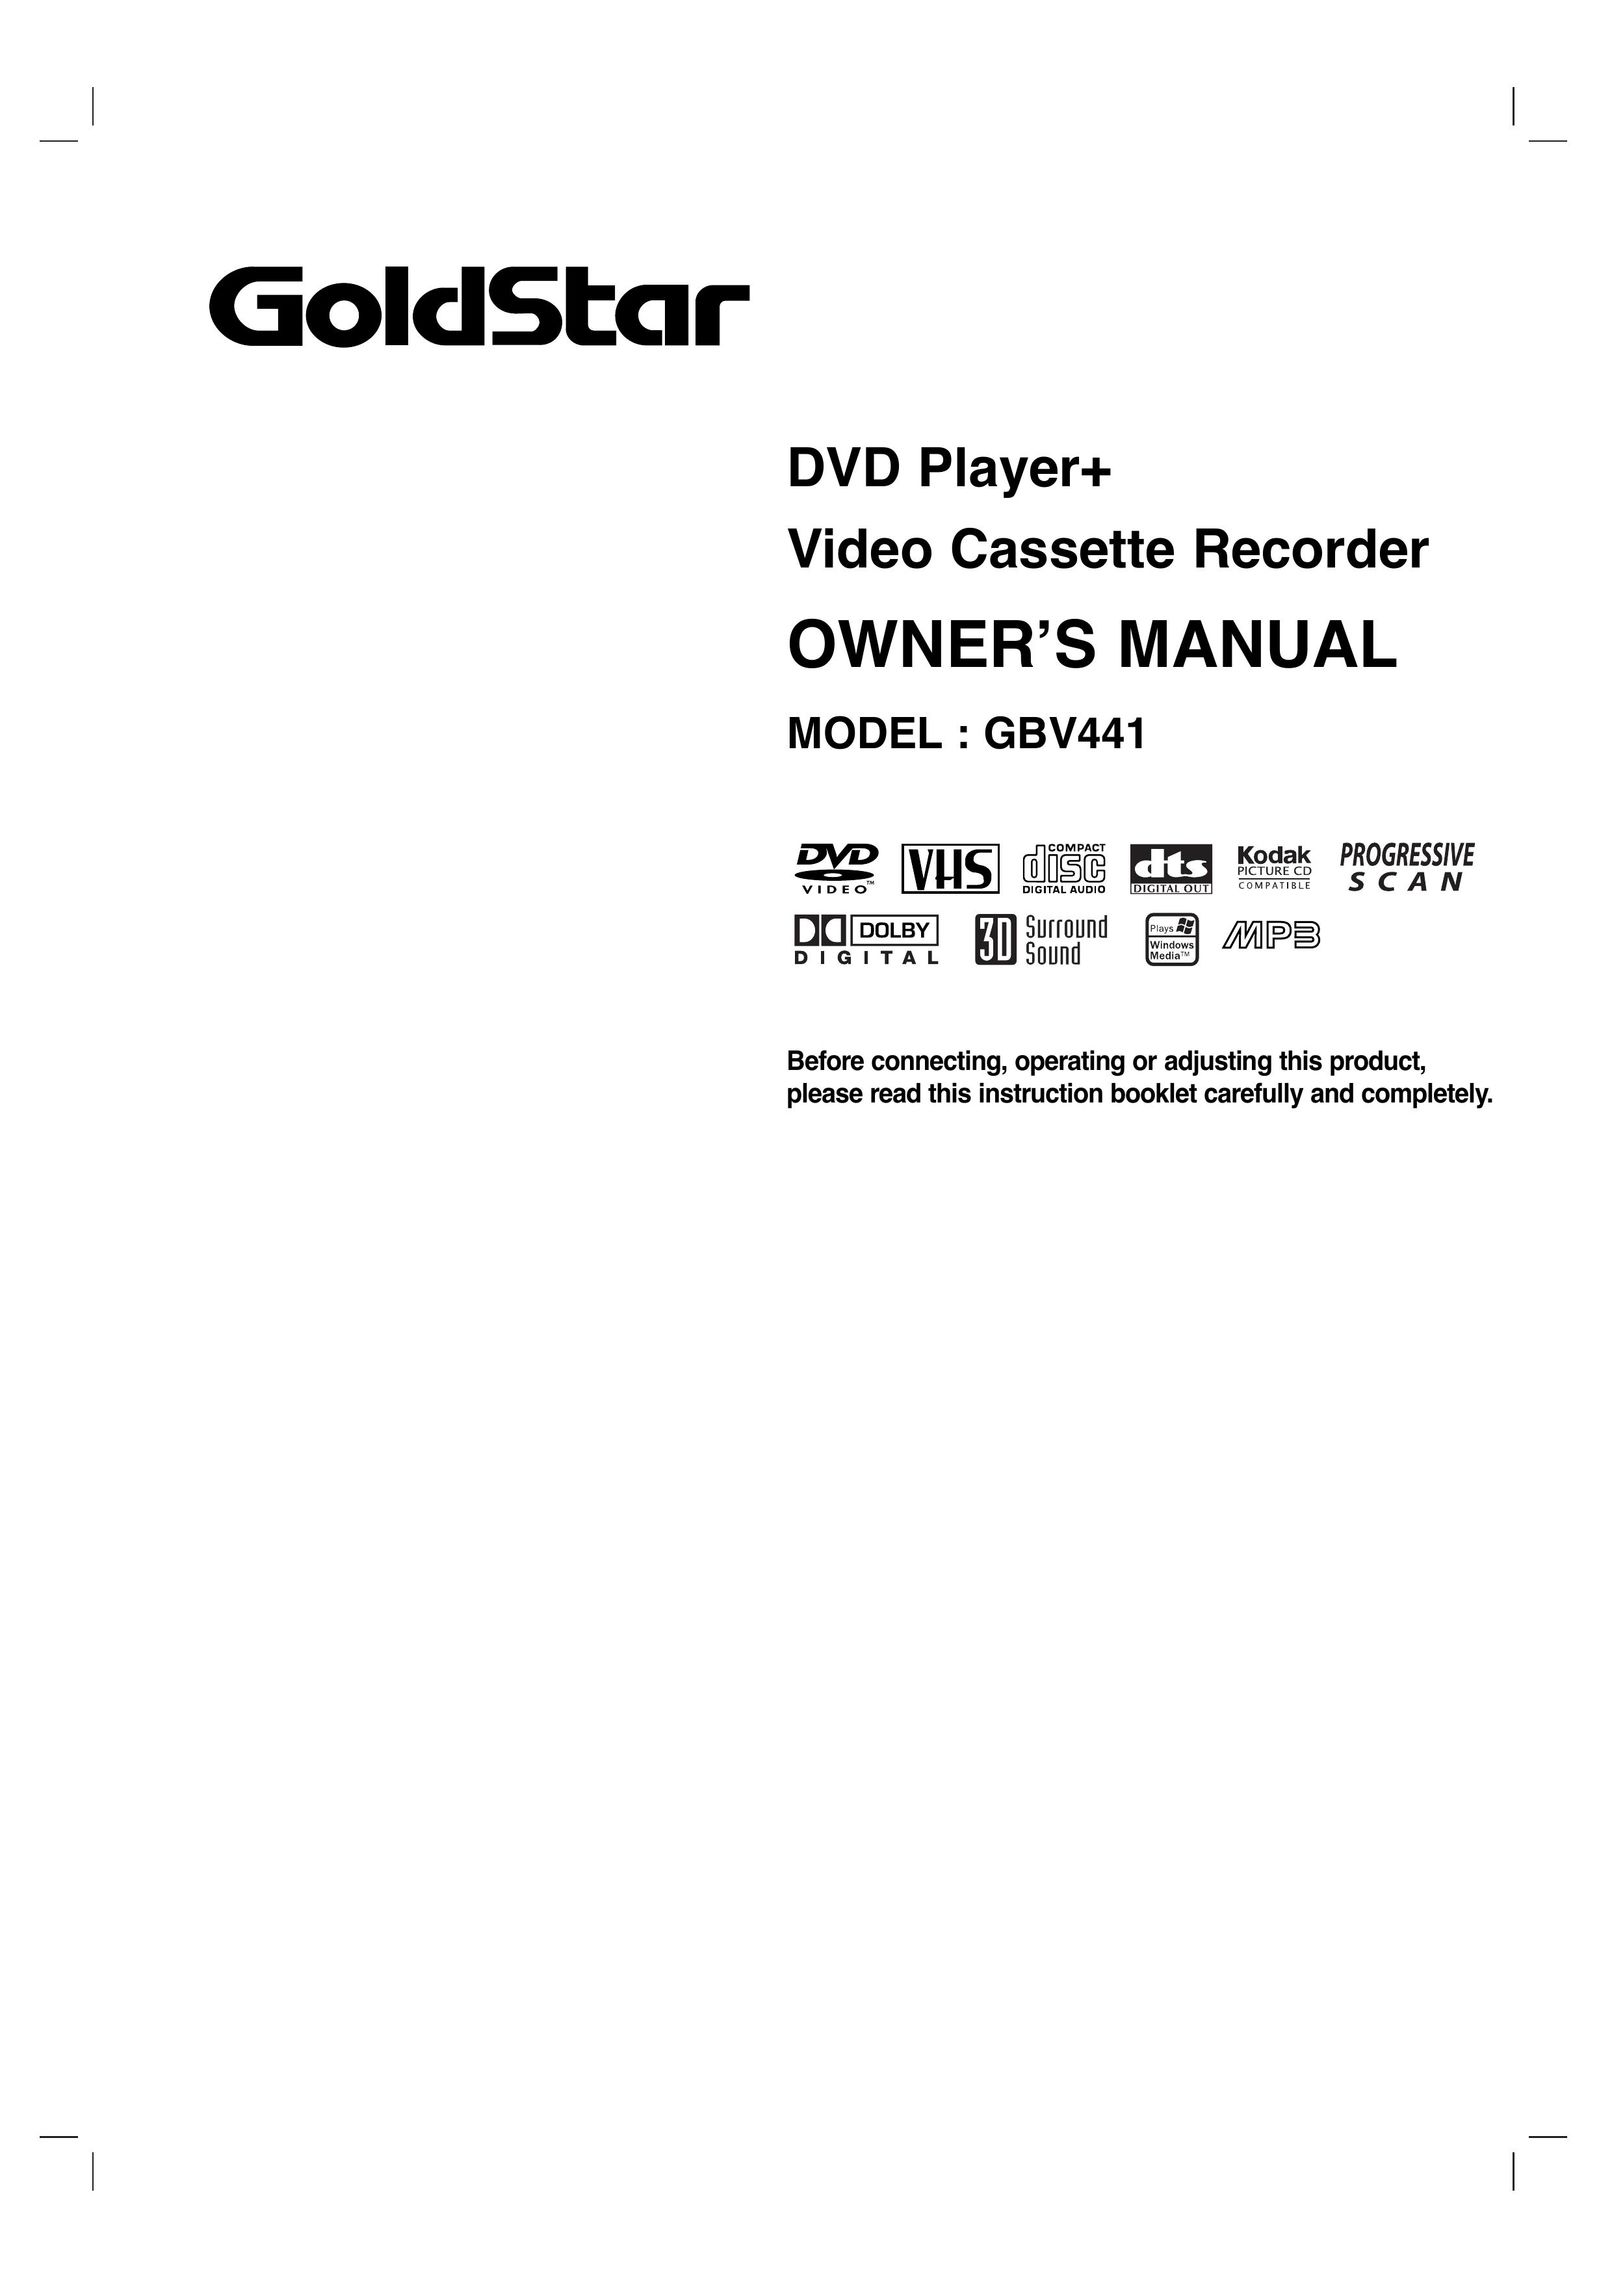 Goldstar GBV441 DVD Player User Manual